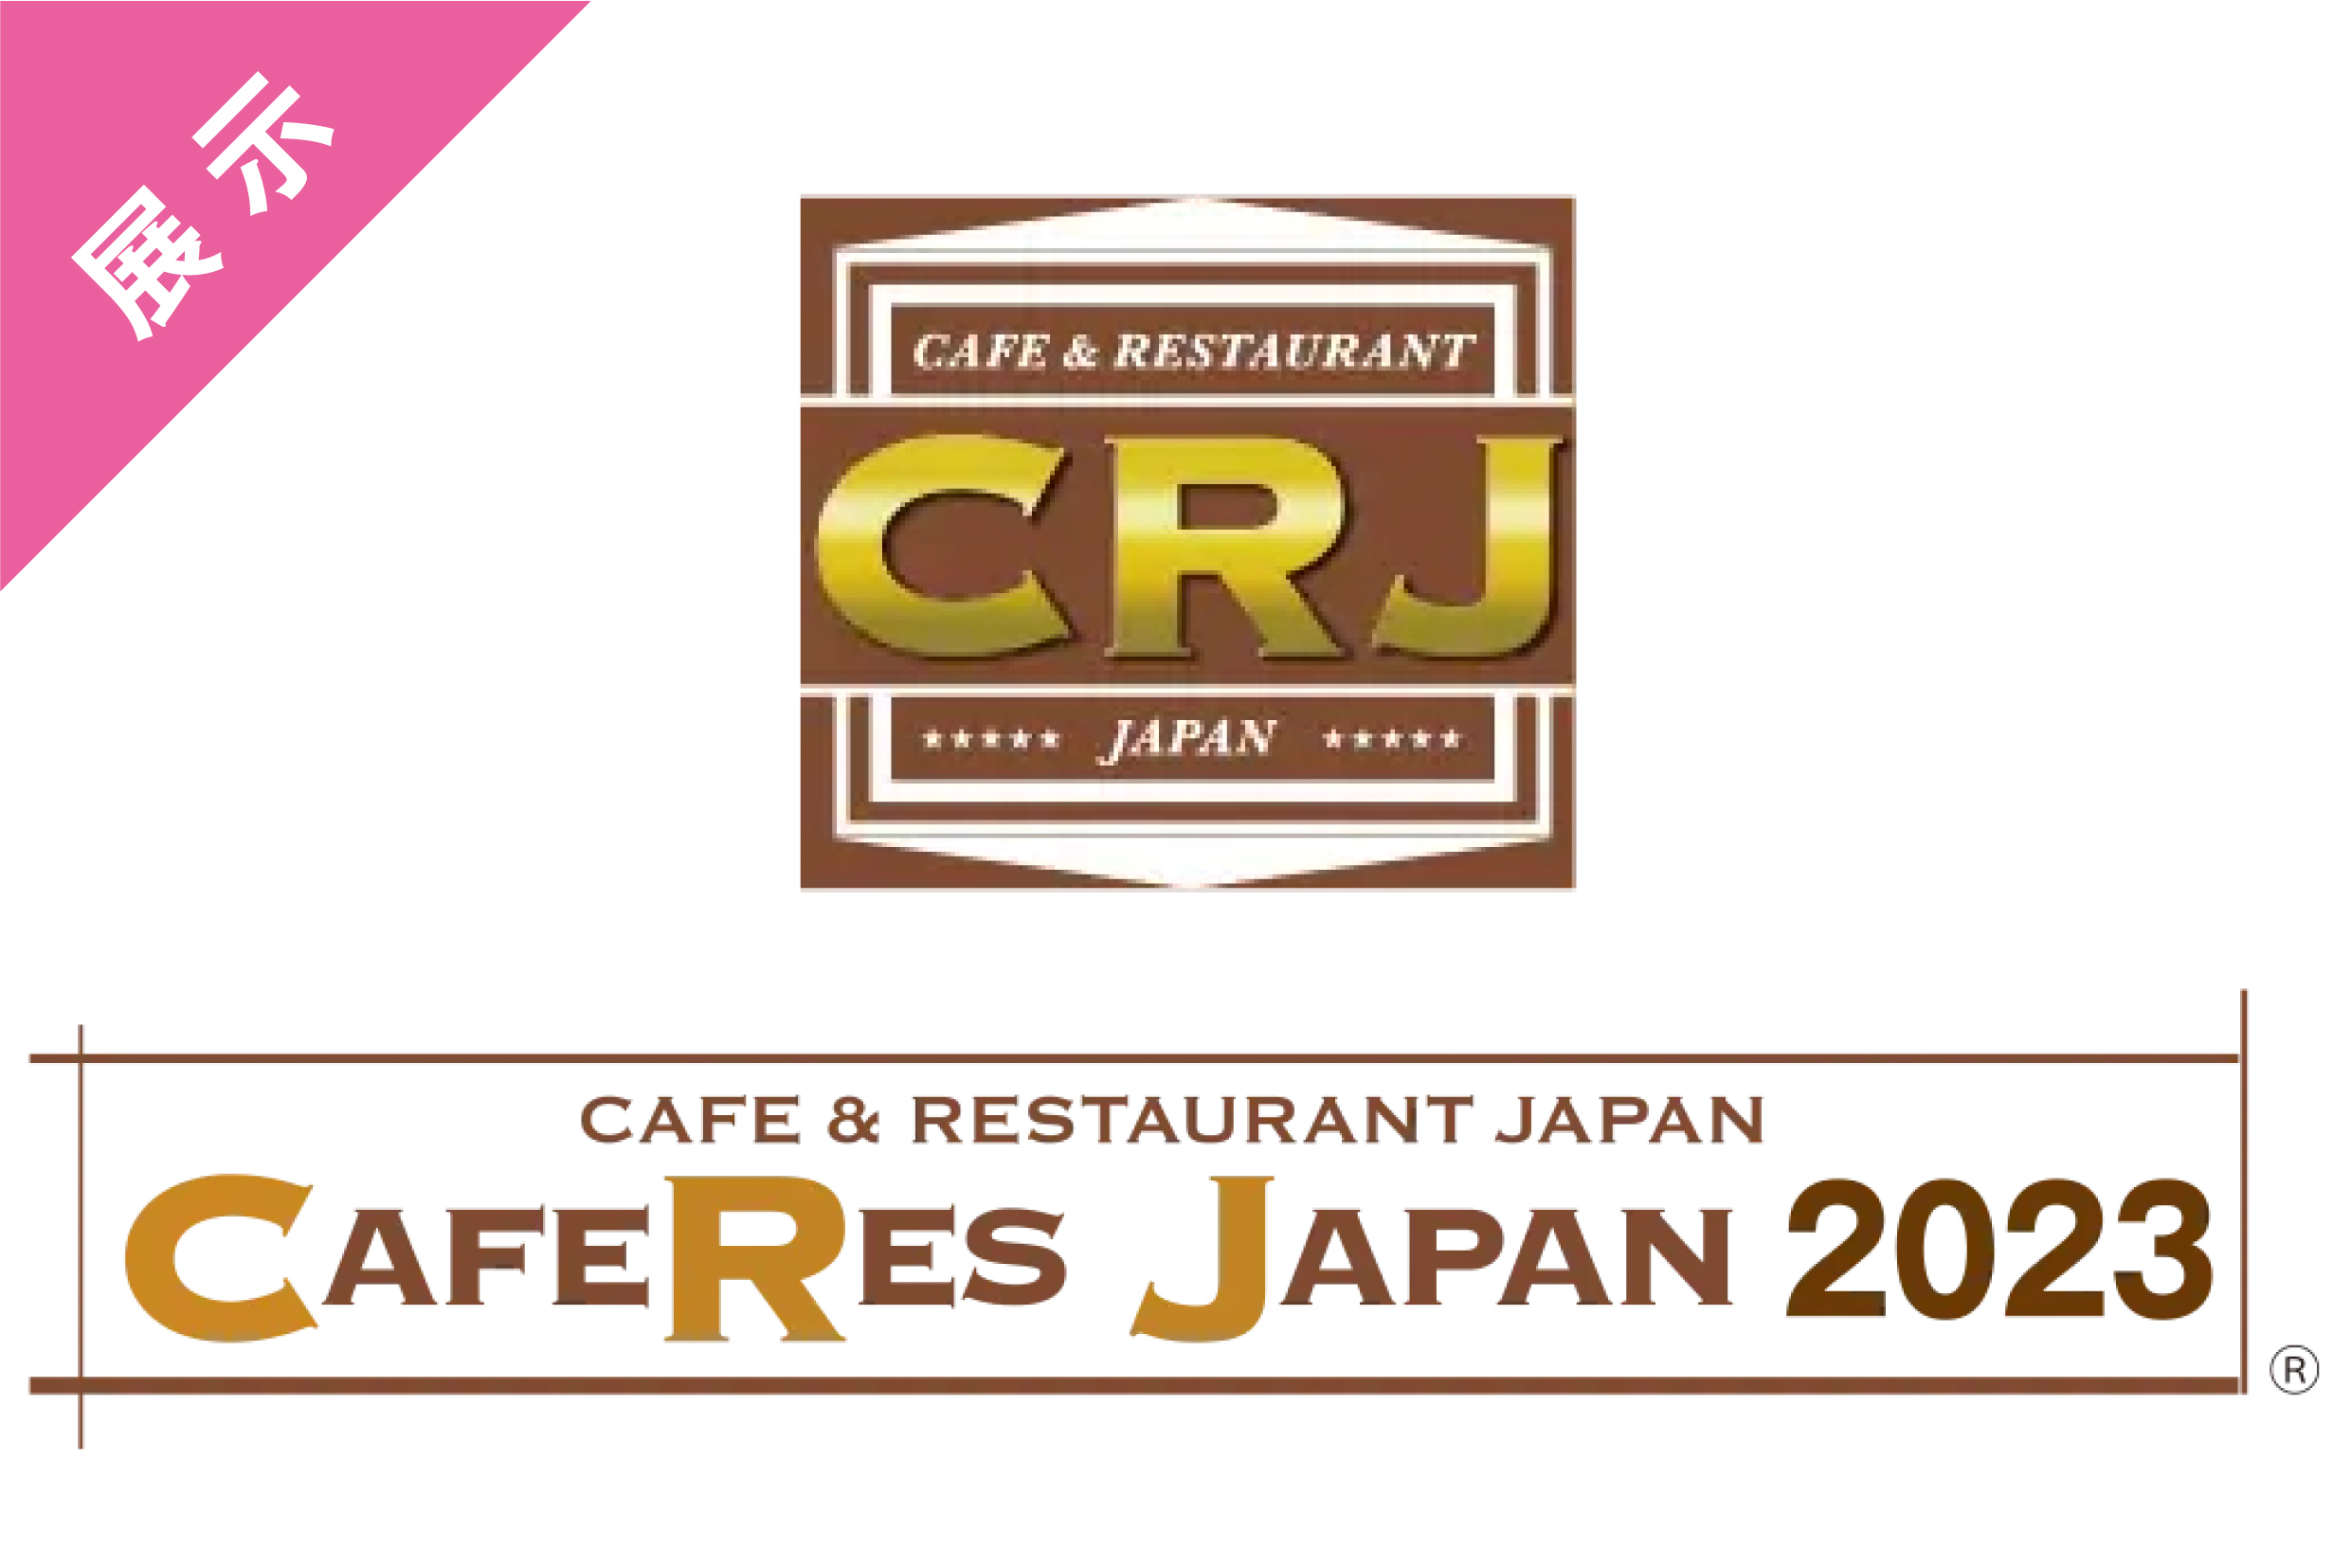  『CAFERES JAPAN 2023』に当社製品が展示されました  